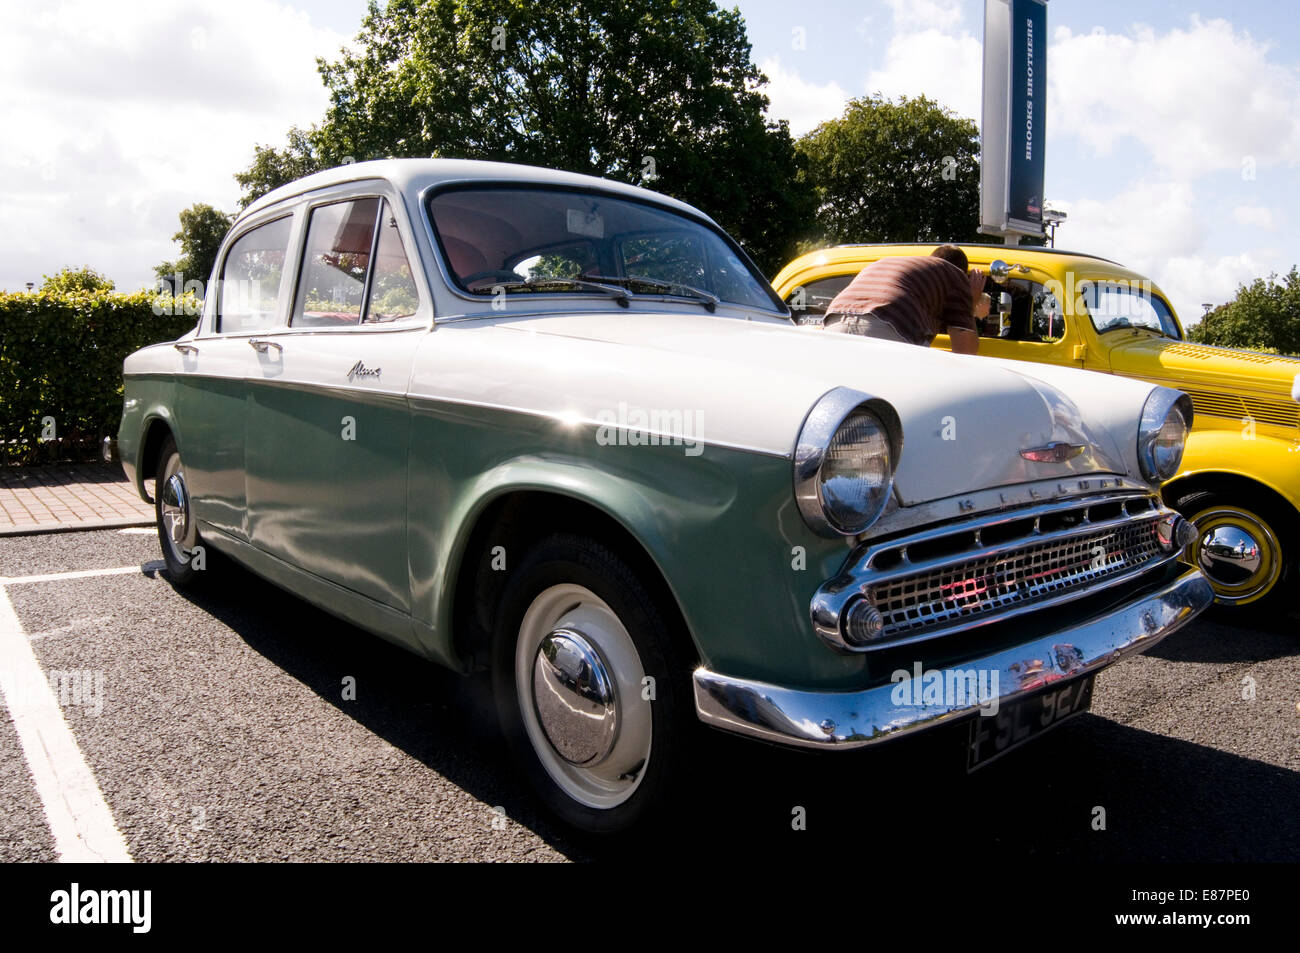 hillman minx classic car cars english saloon Stock Photo